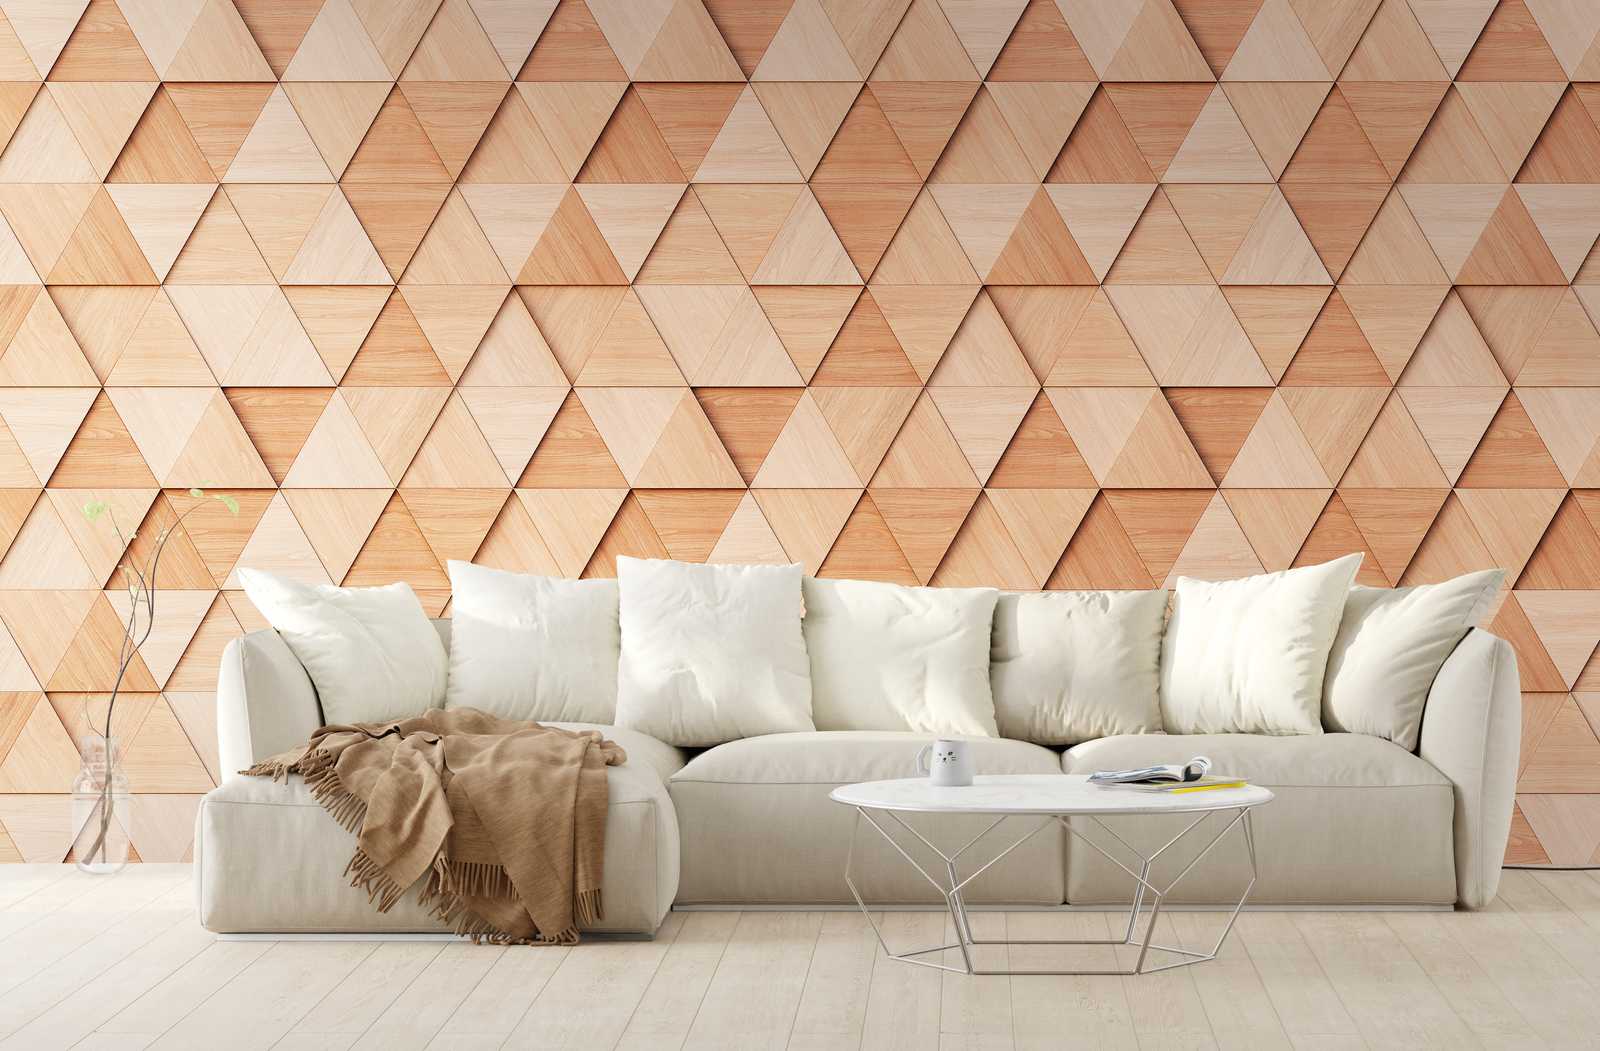             Tapeten-Neuheit – Motivtapete Holzoptik Design mit 3D Dreieck-Muster
        